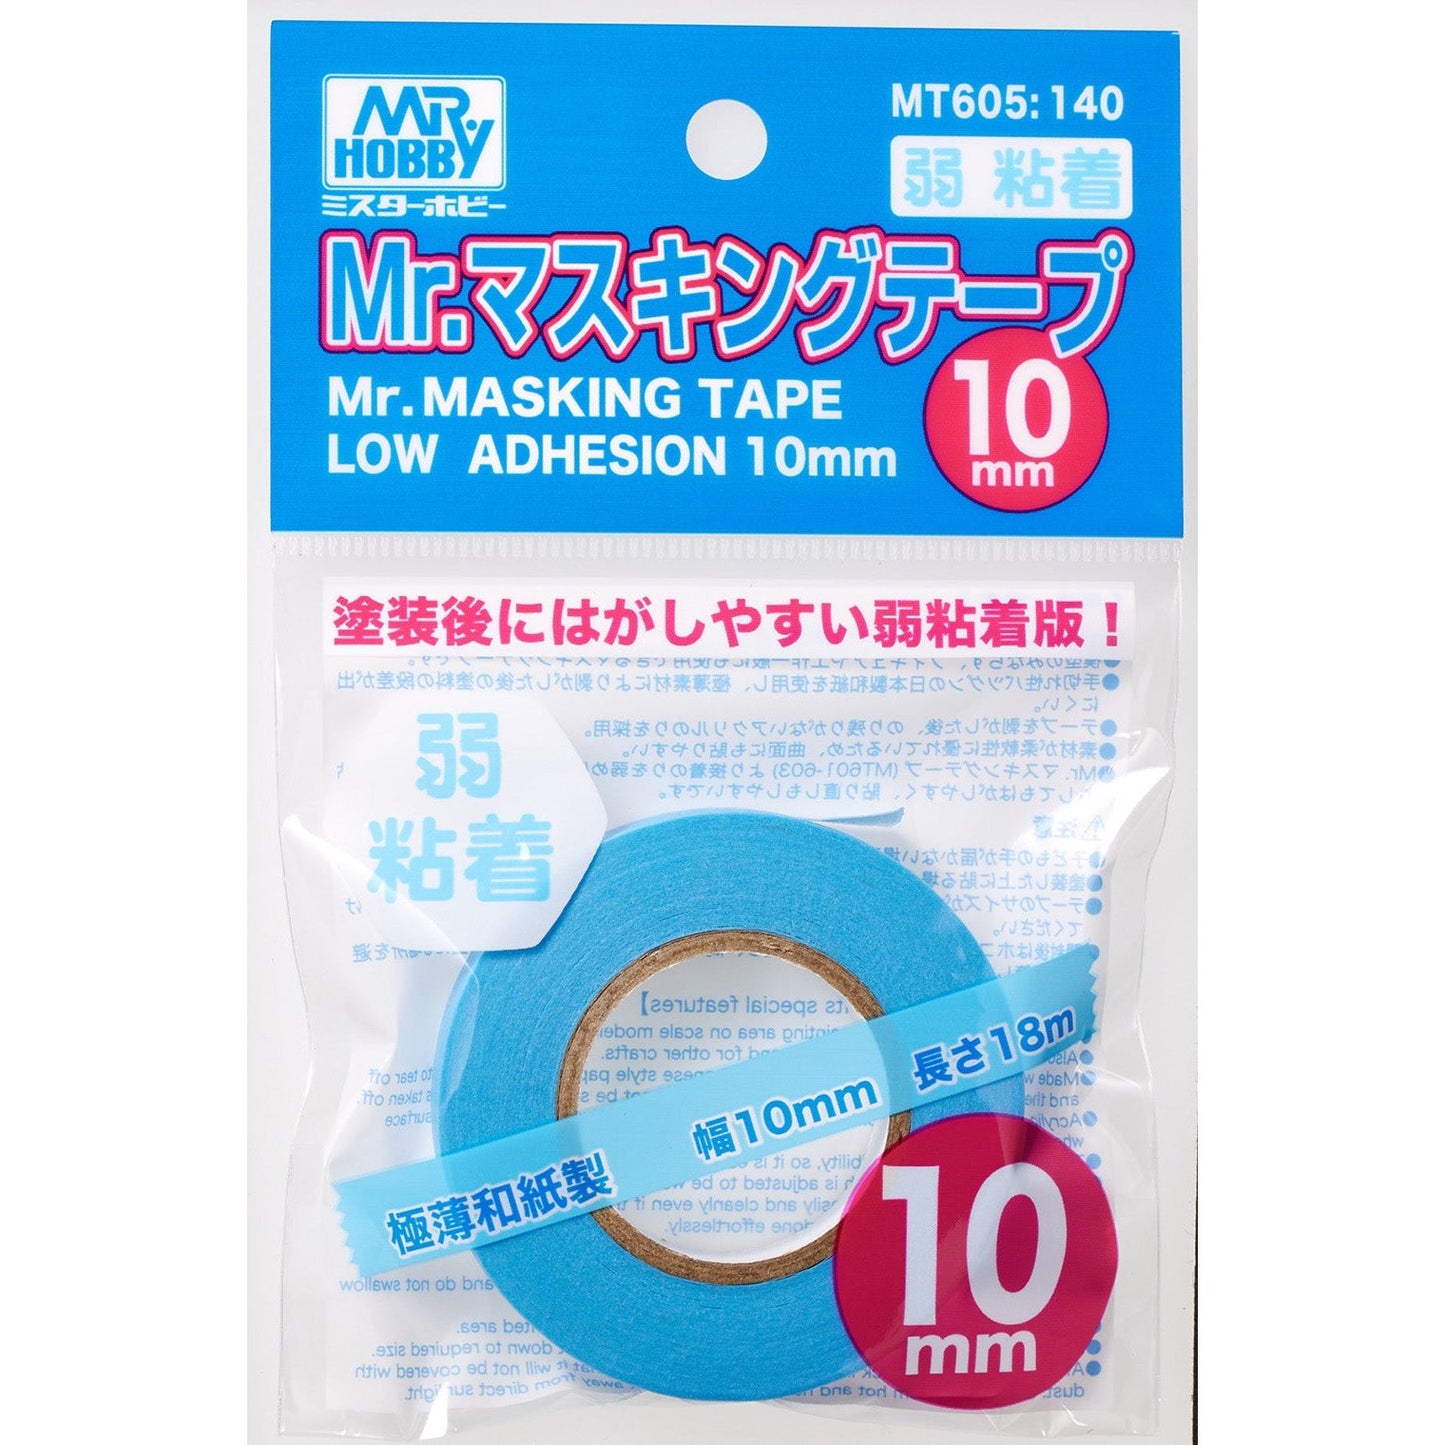 Mr Hobby MT-605 Mr. Masking Tape Weak Adhesive 10mm